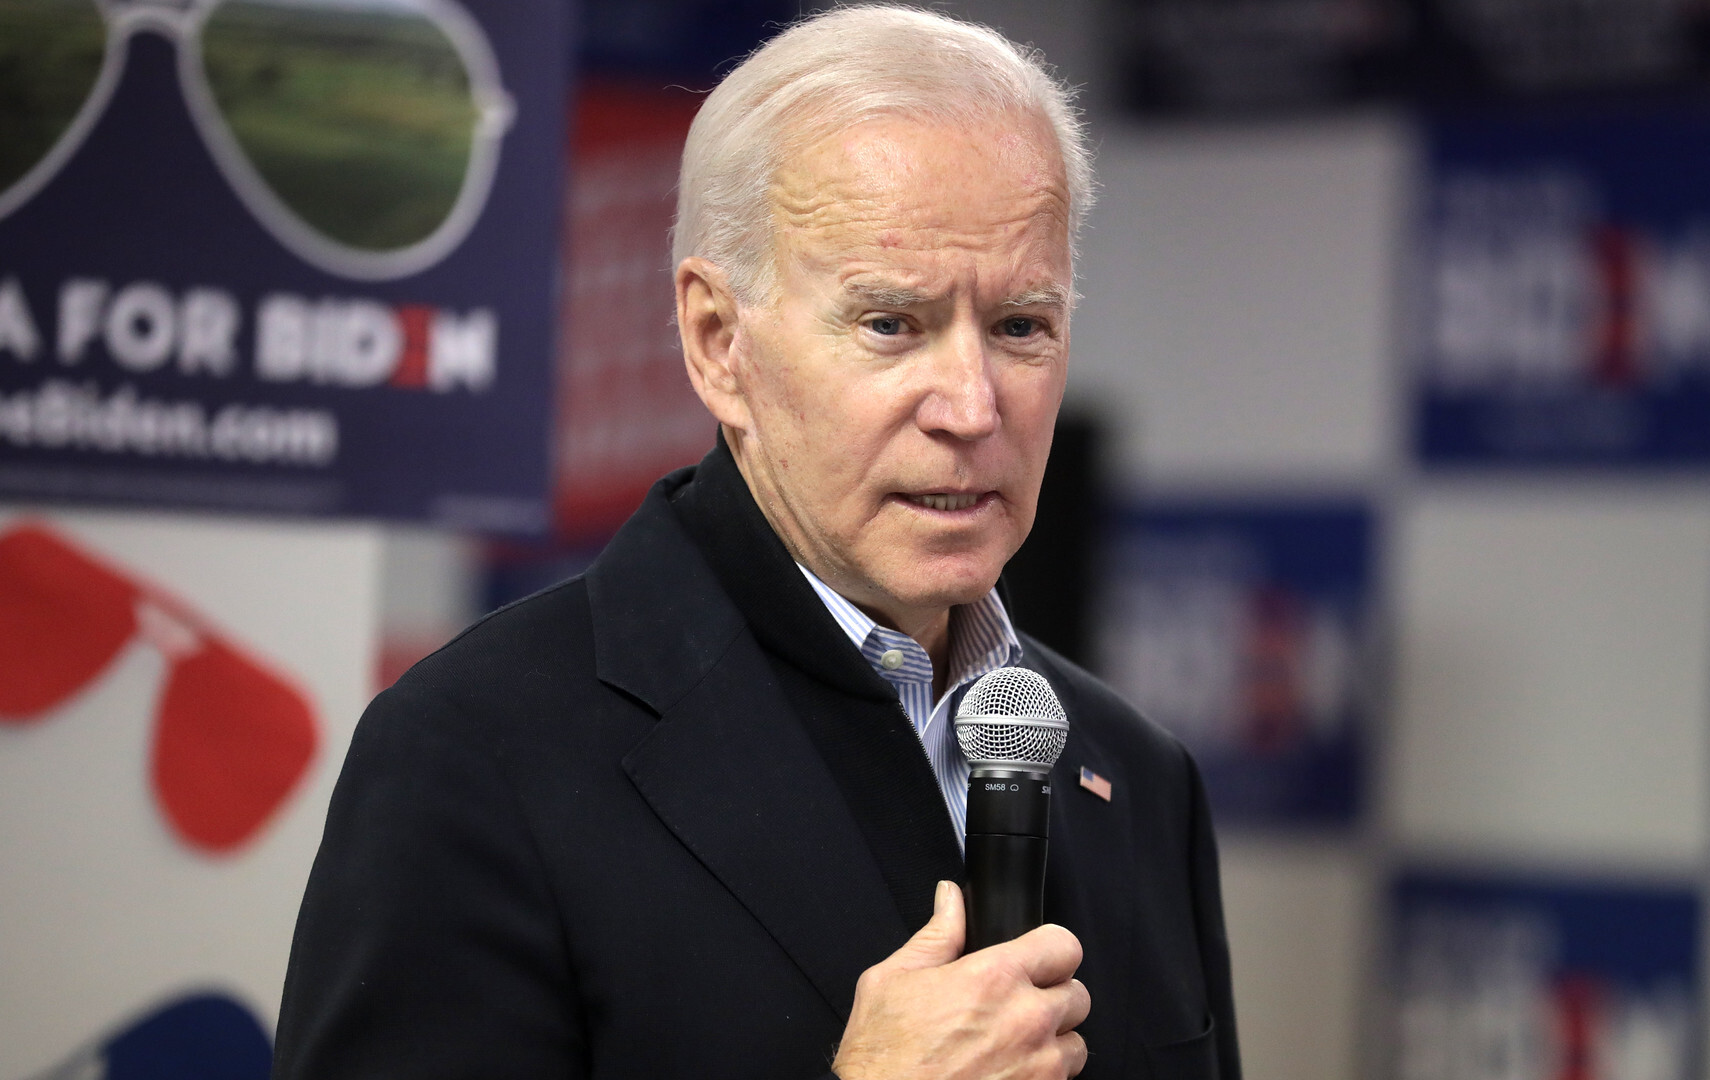 "Joe Biden" by Gage Skidmore is licensed under CC BY-SA 2.0.